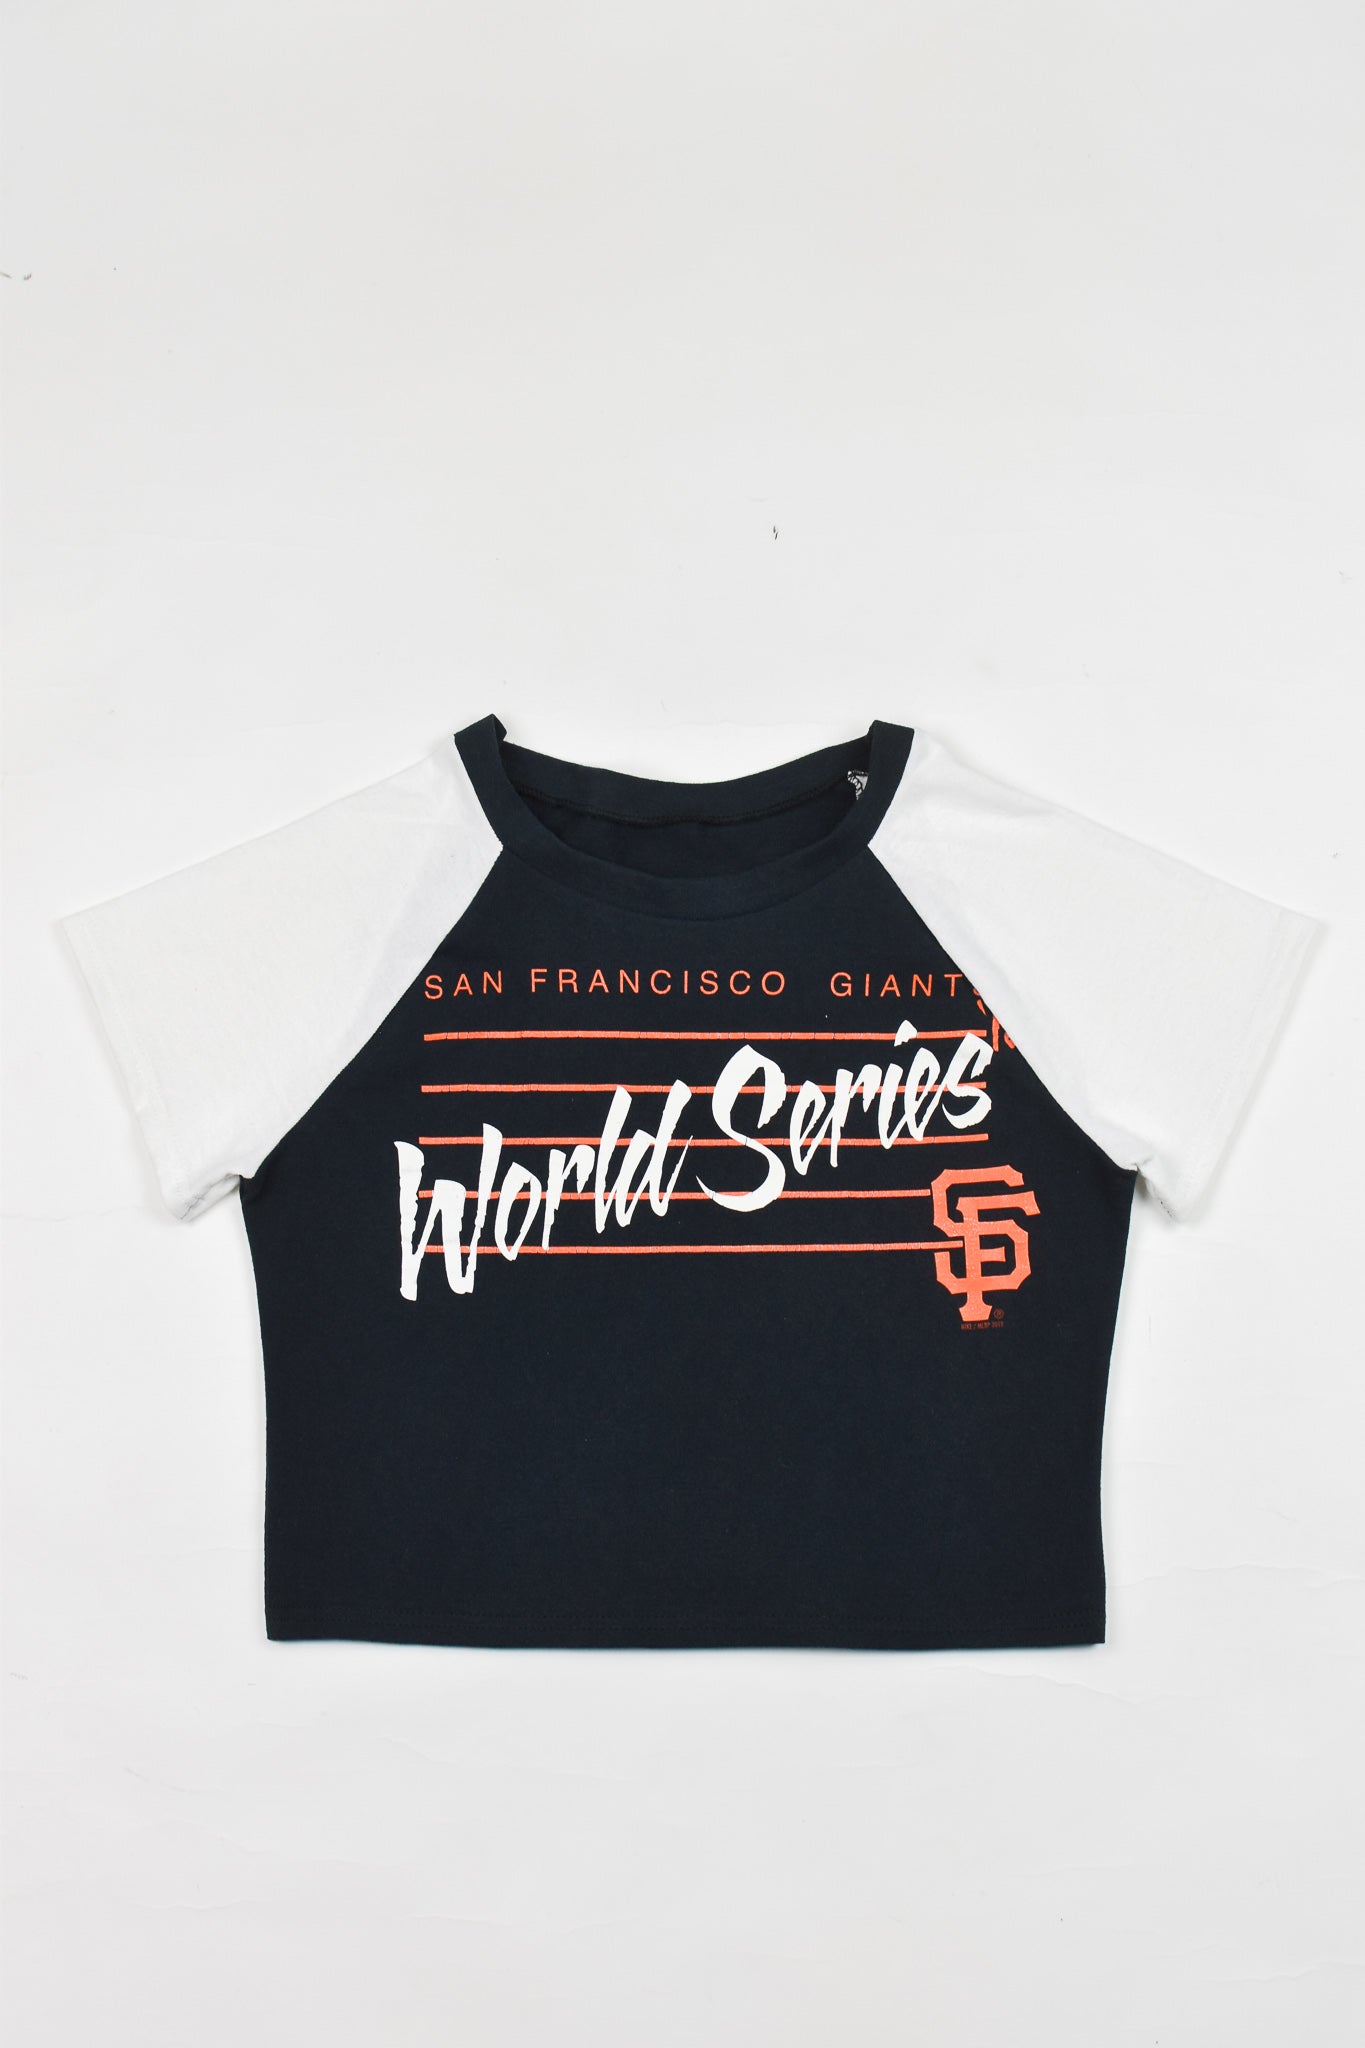 sf giants world series shirt